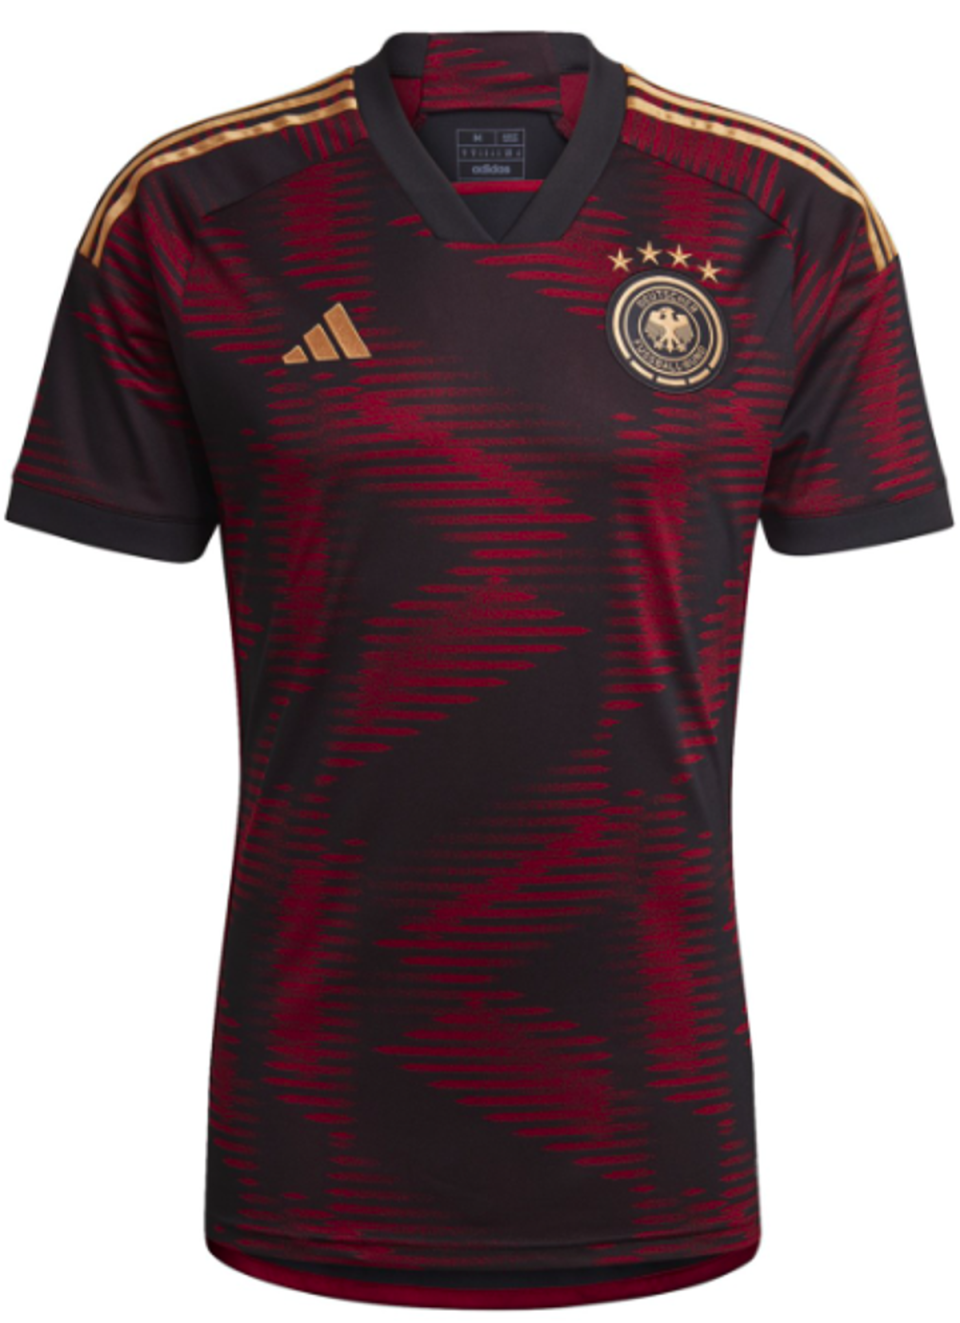 Germany away (Adidas)